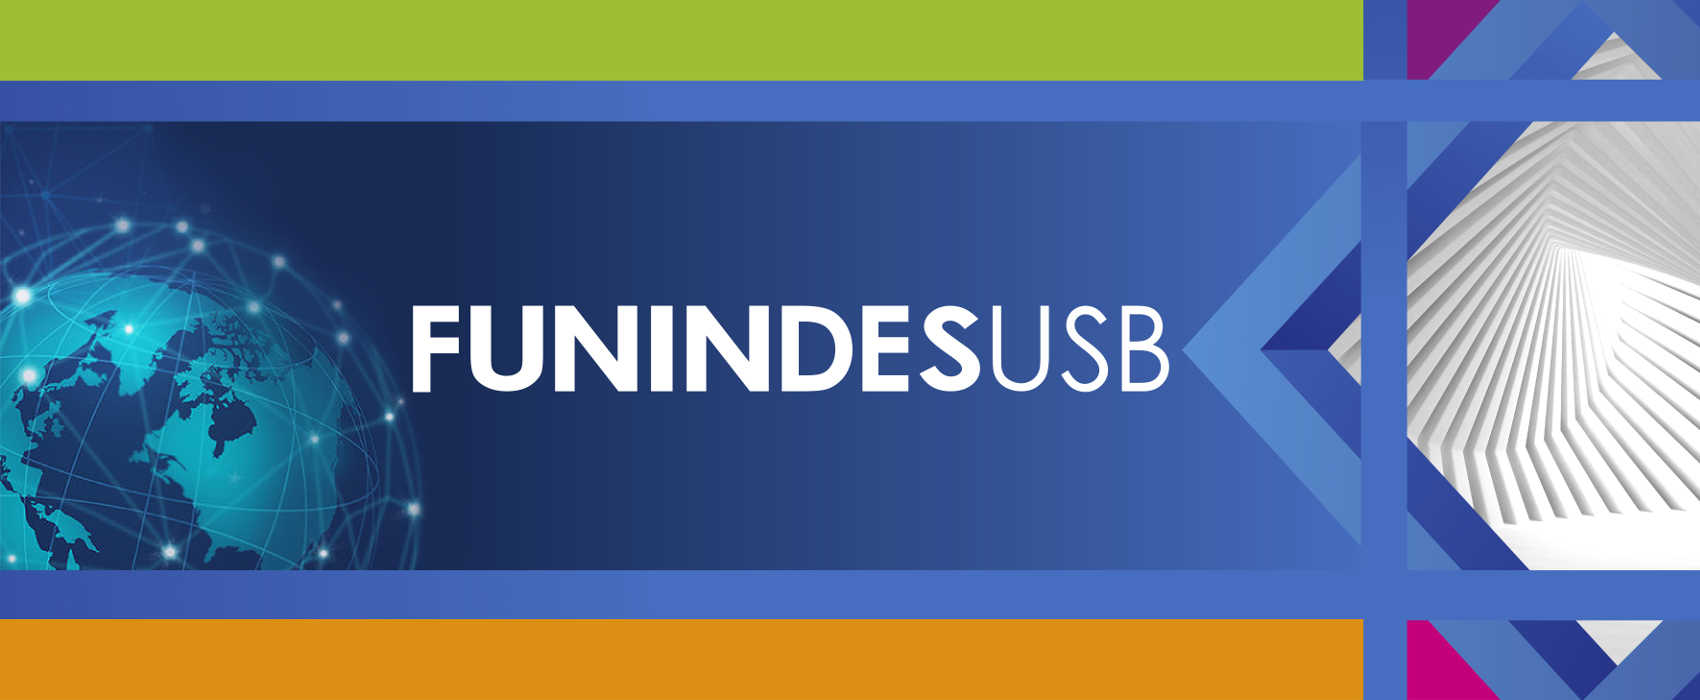 Funindes_USB